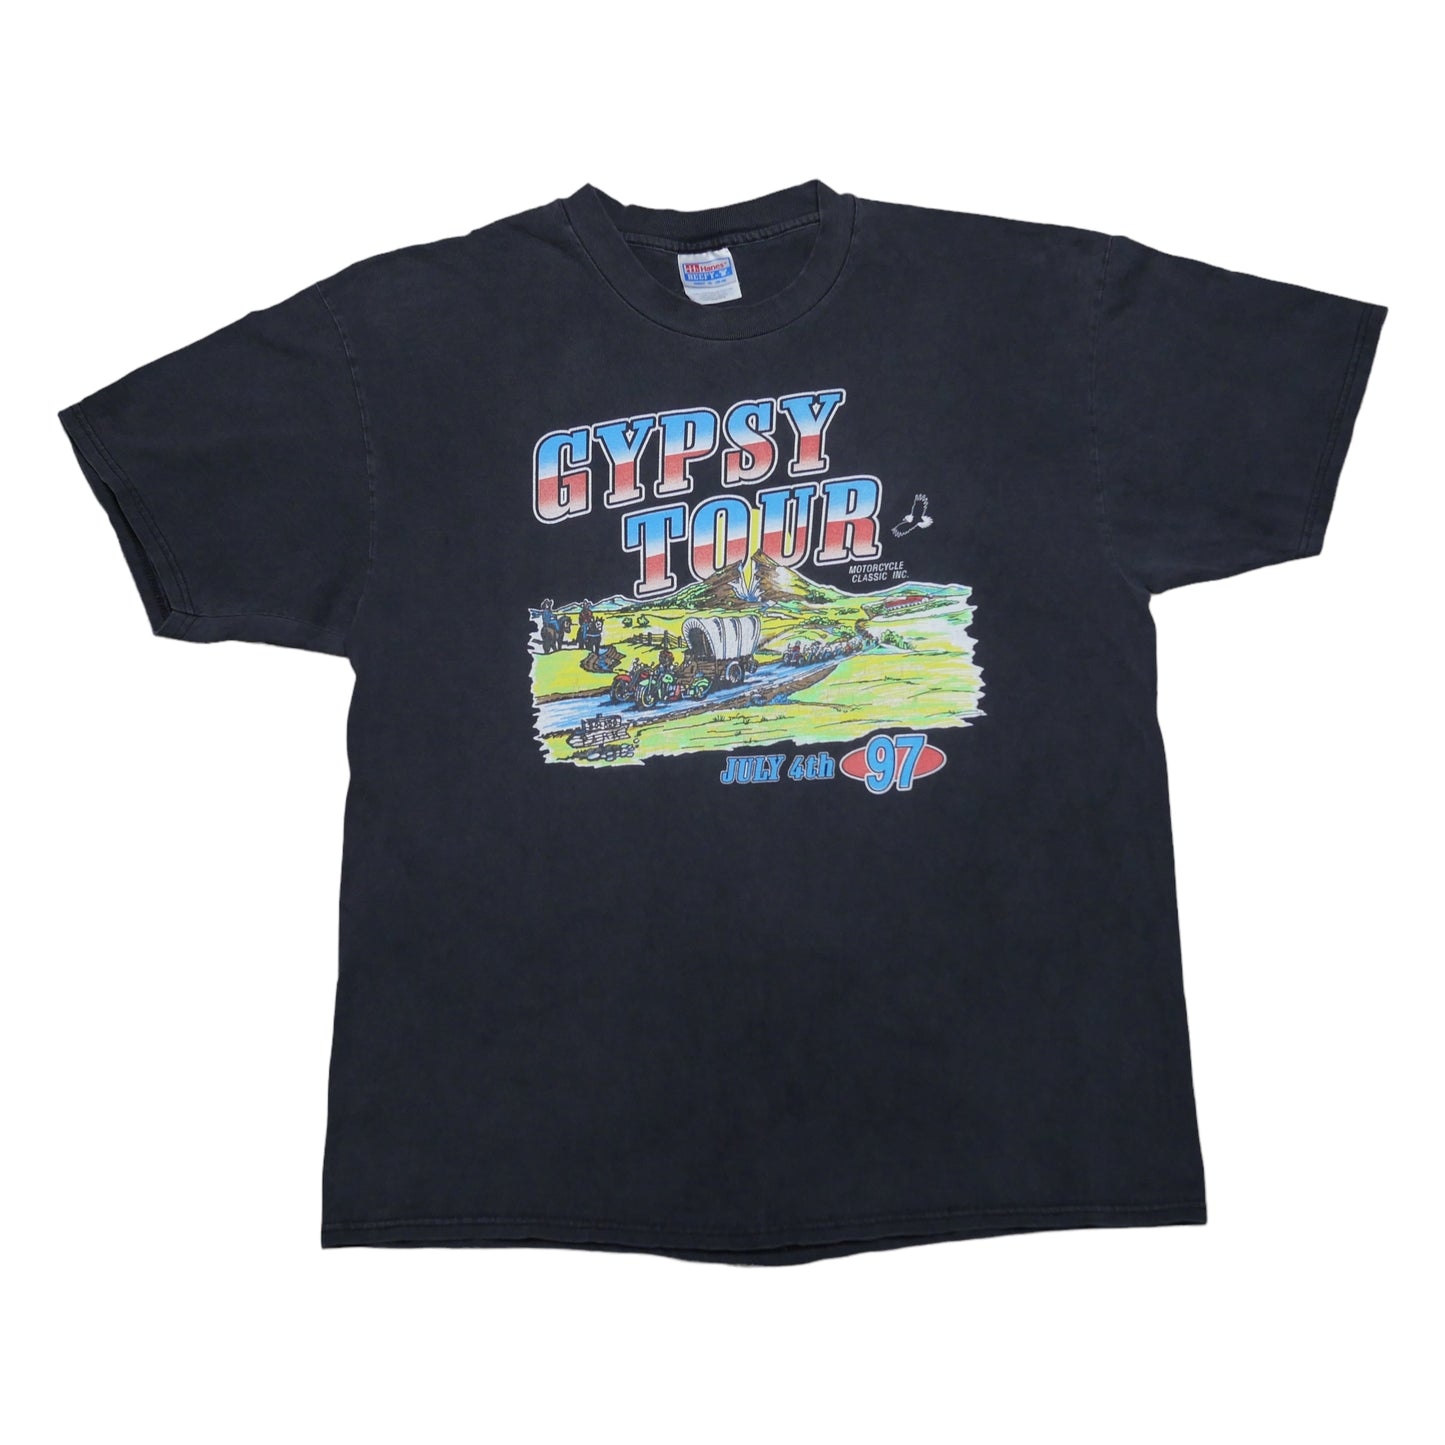 Gypsy Tour 1997 Hollister Shirt - Bolado Park Motorcycle Classic.  - XL